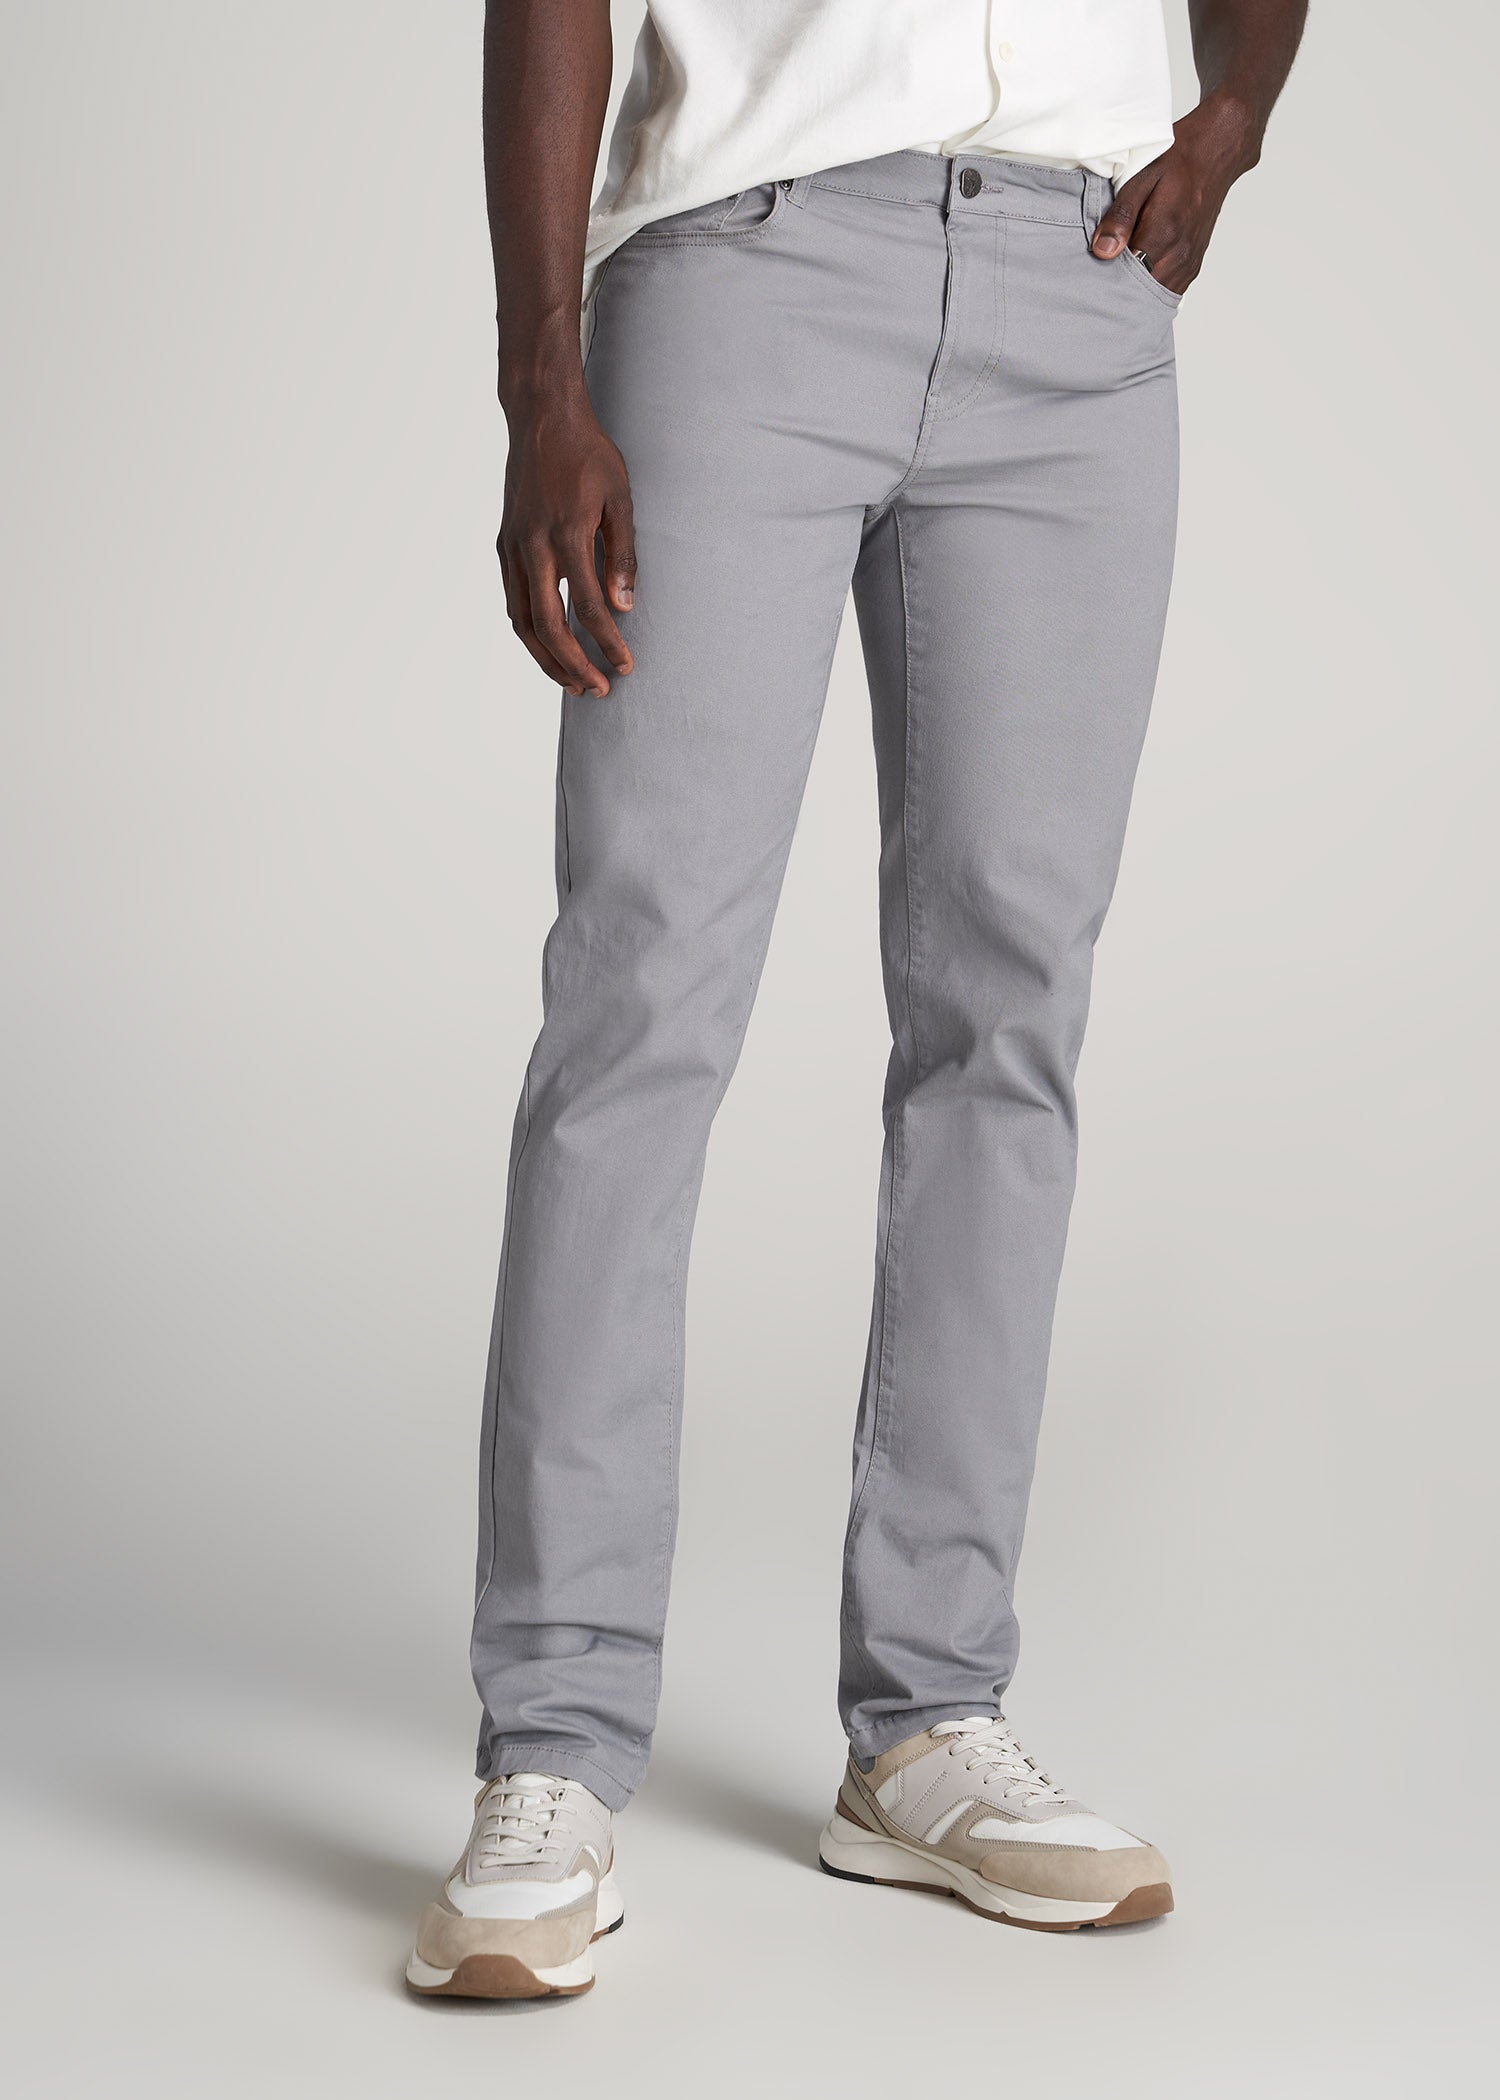 Dylan SLIM FIT Five-Pocket Pants For Tall Men in Pebble Grey